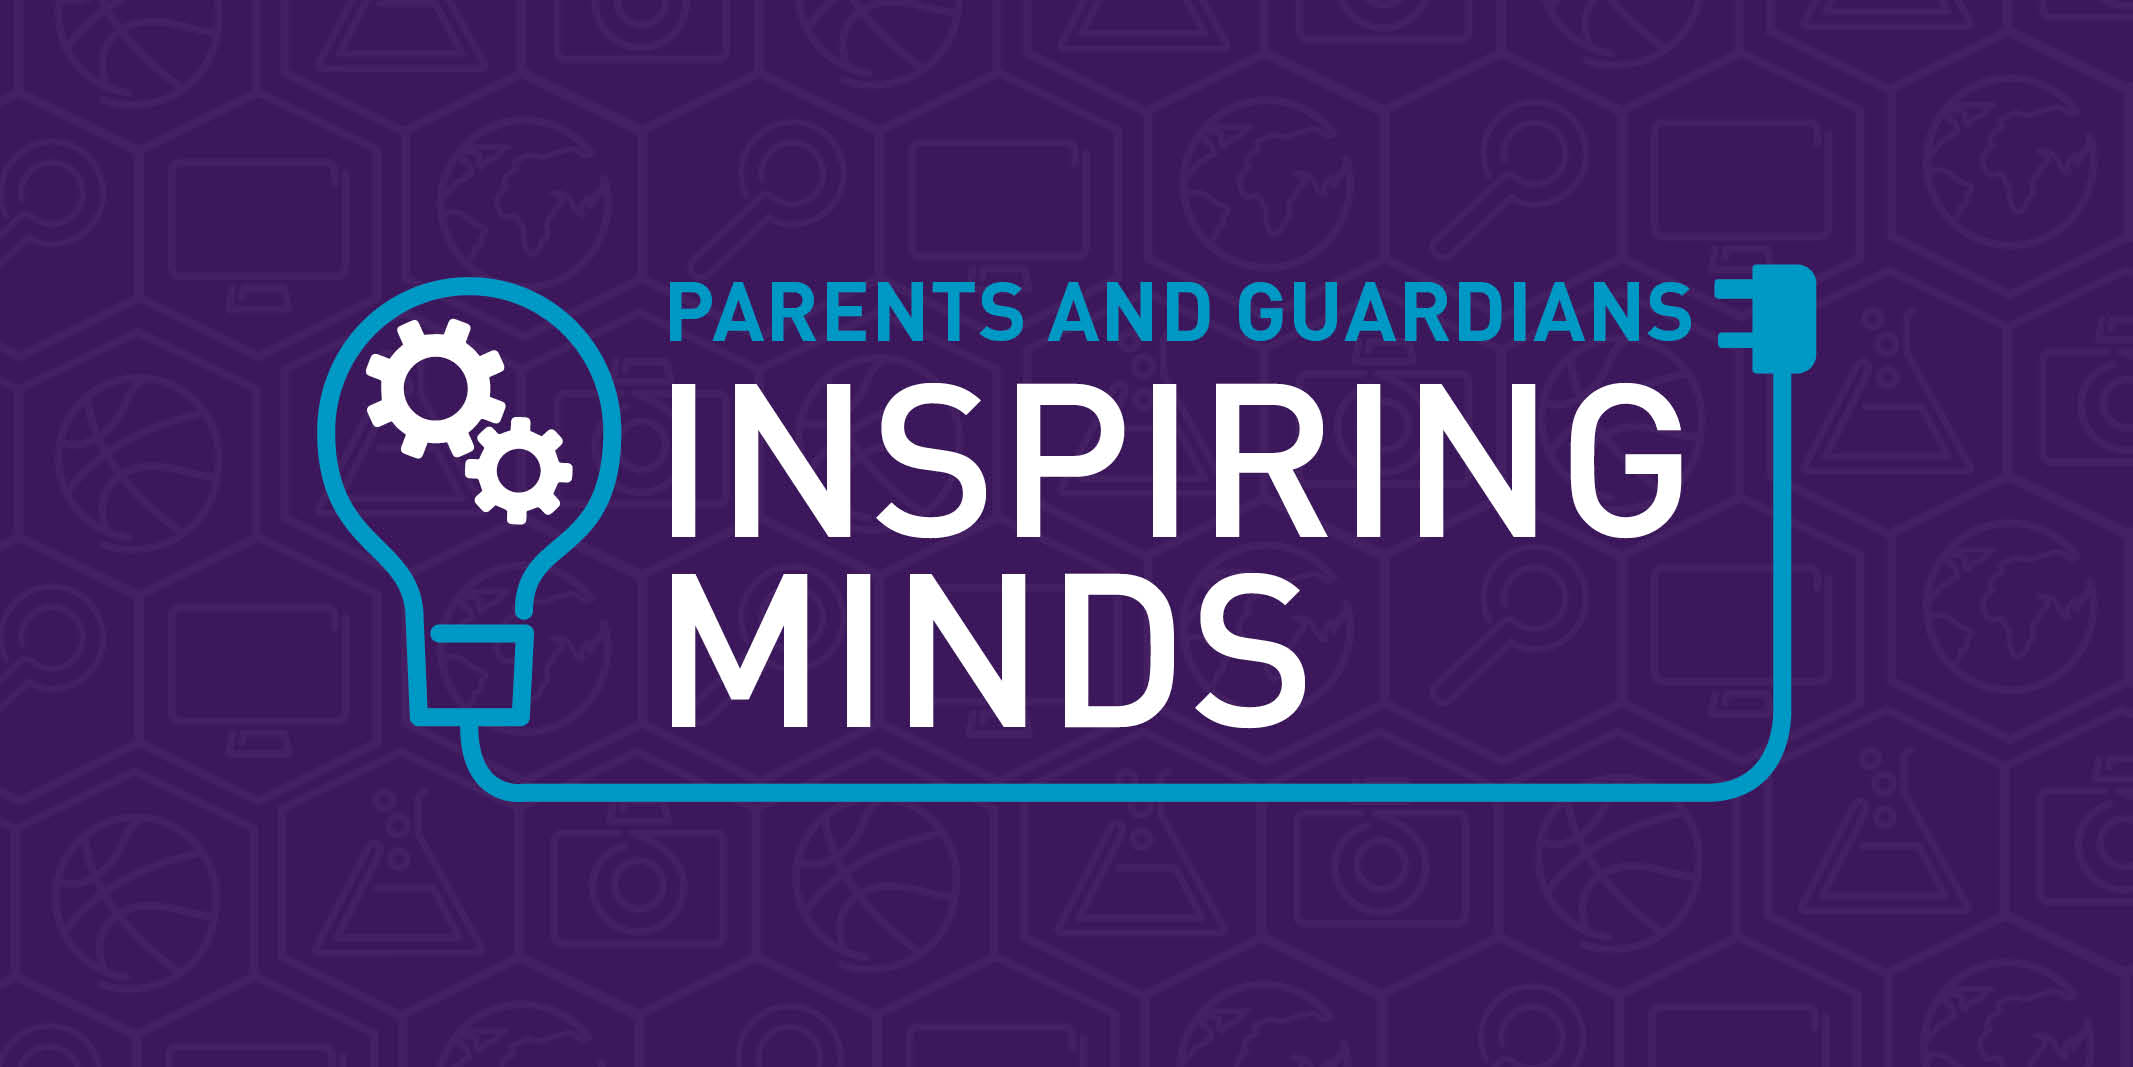 Inspiring minds for parents and guardians